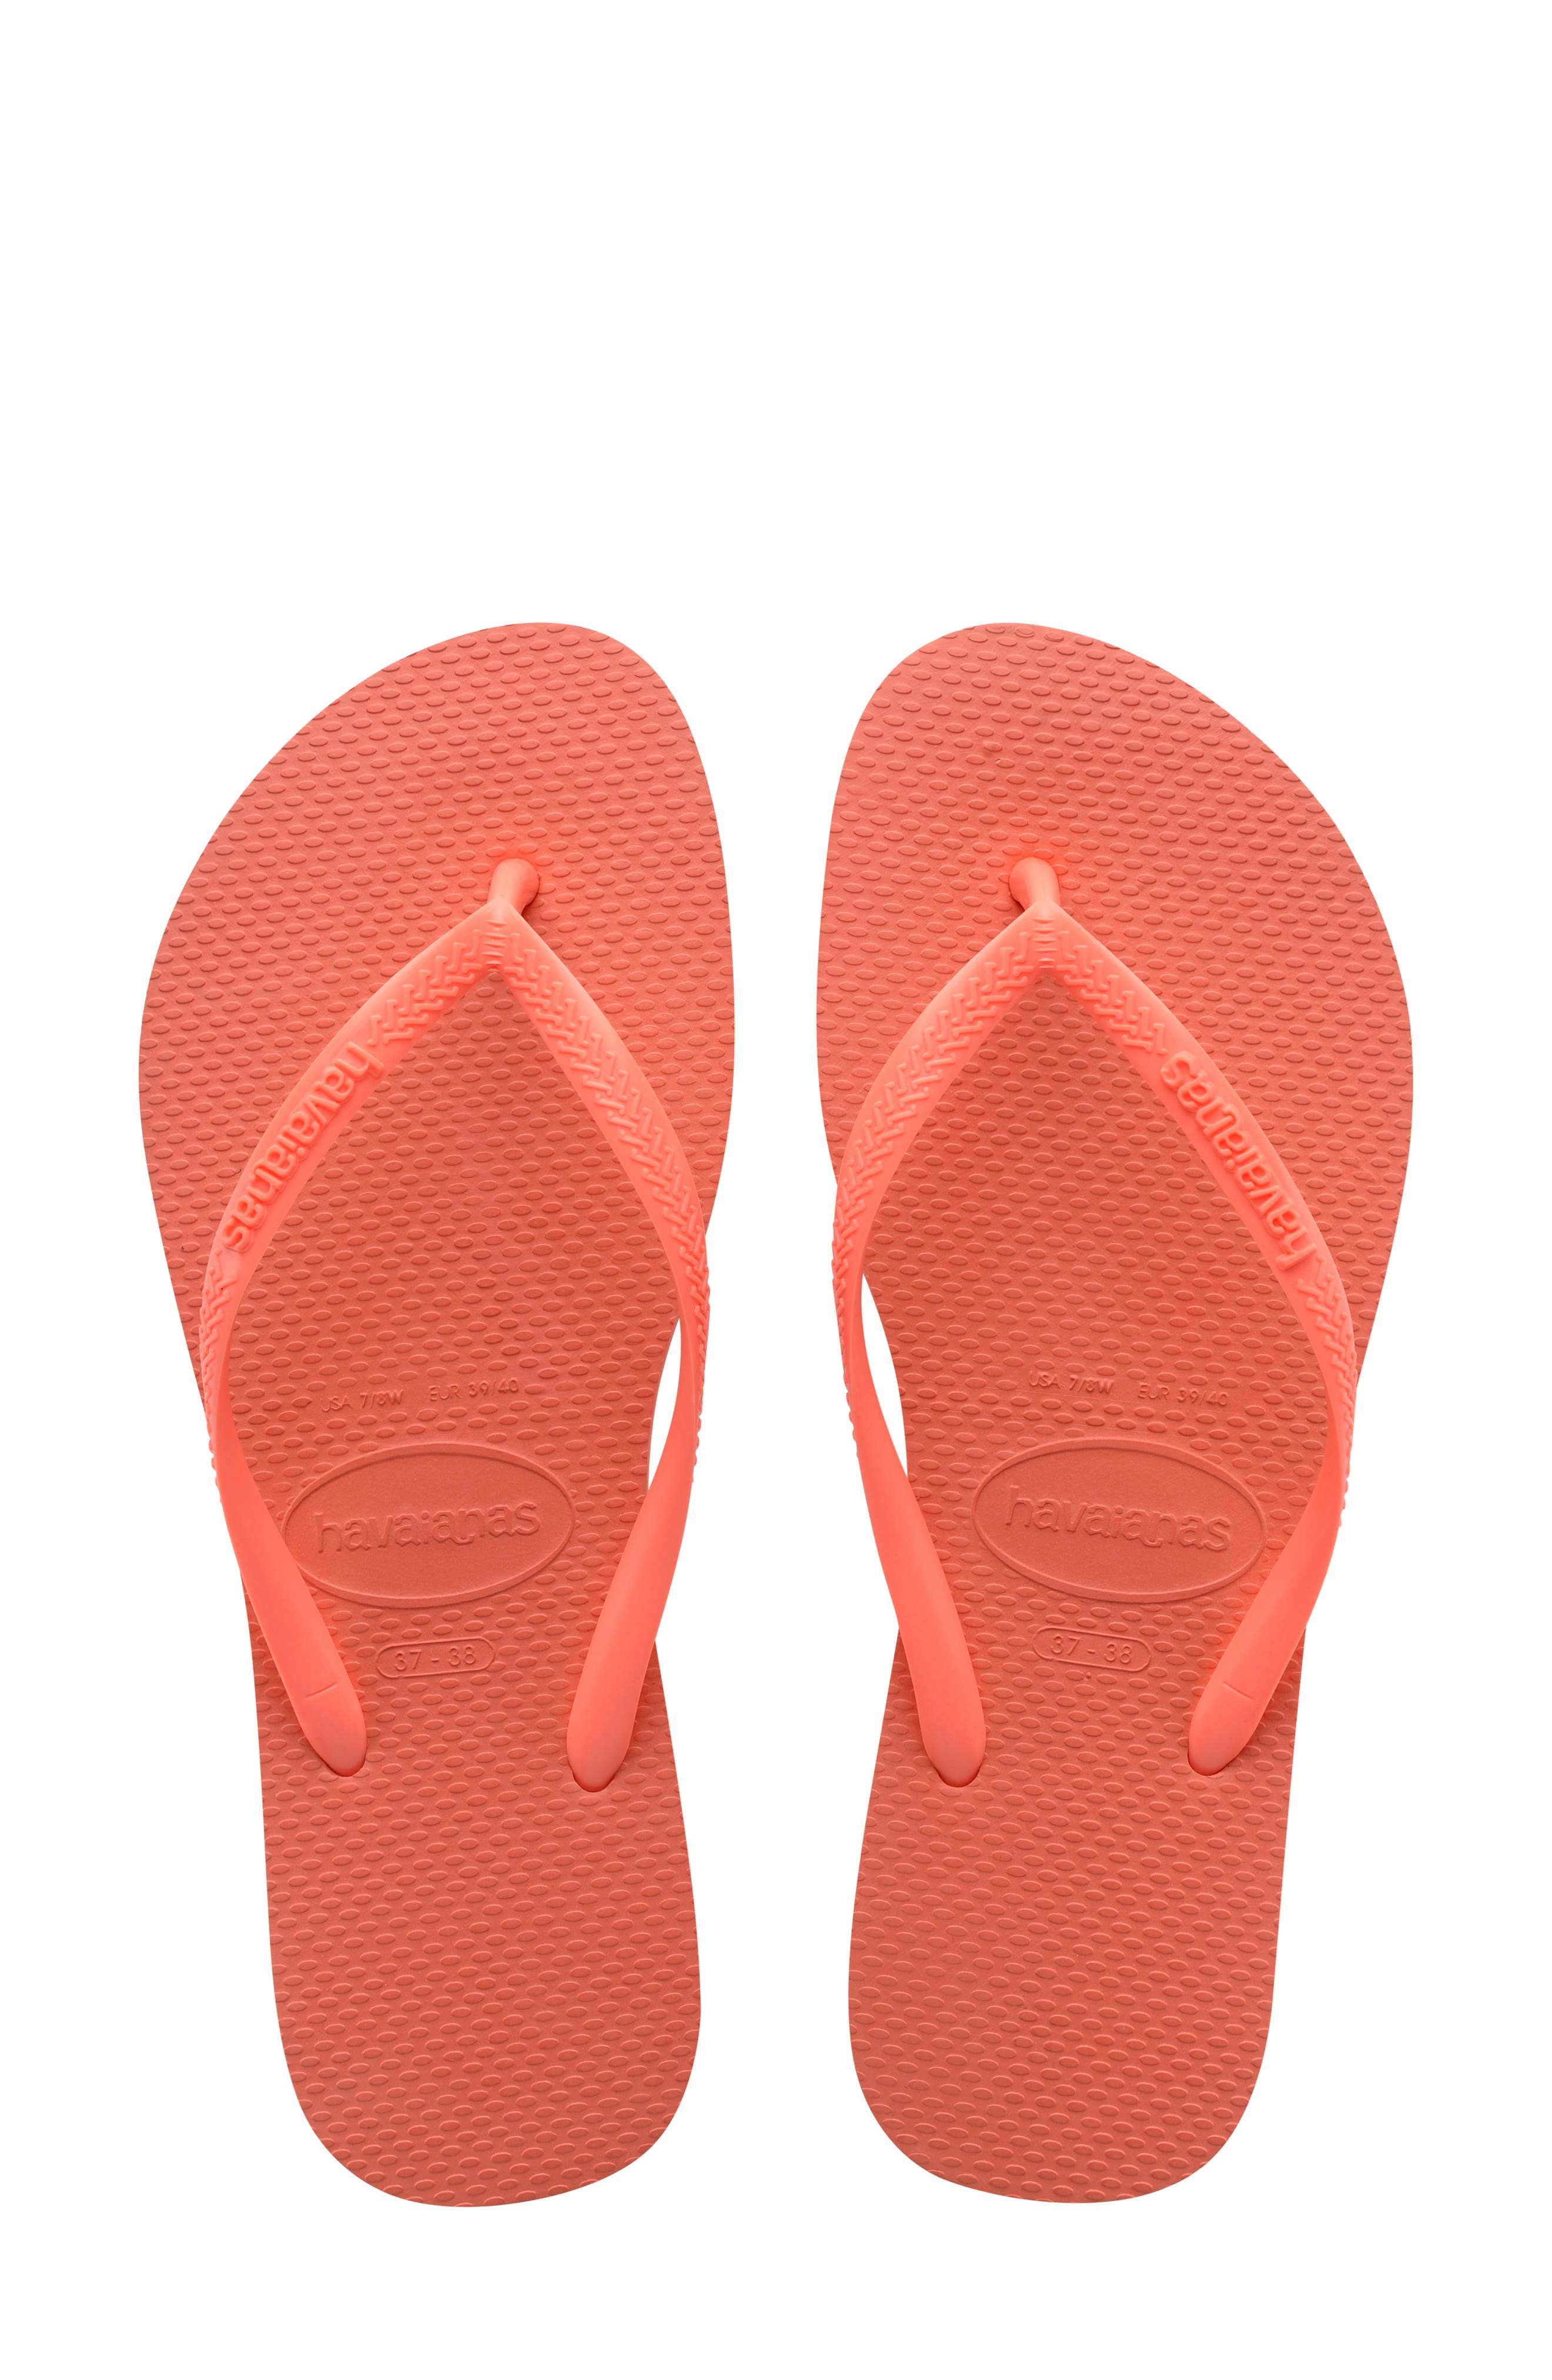 red orange sandals